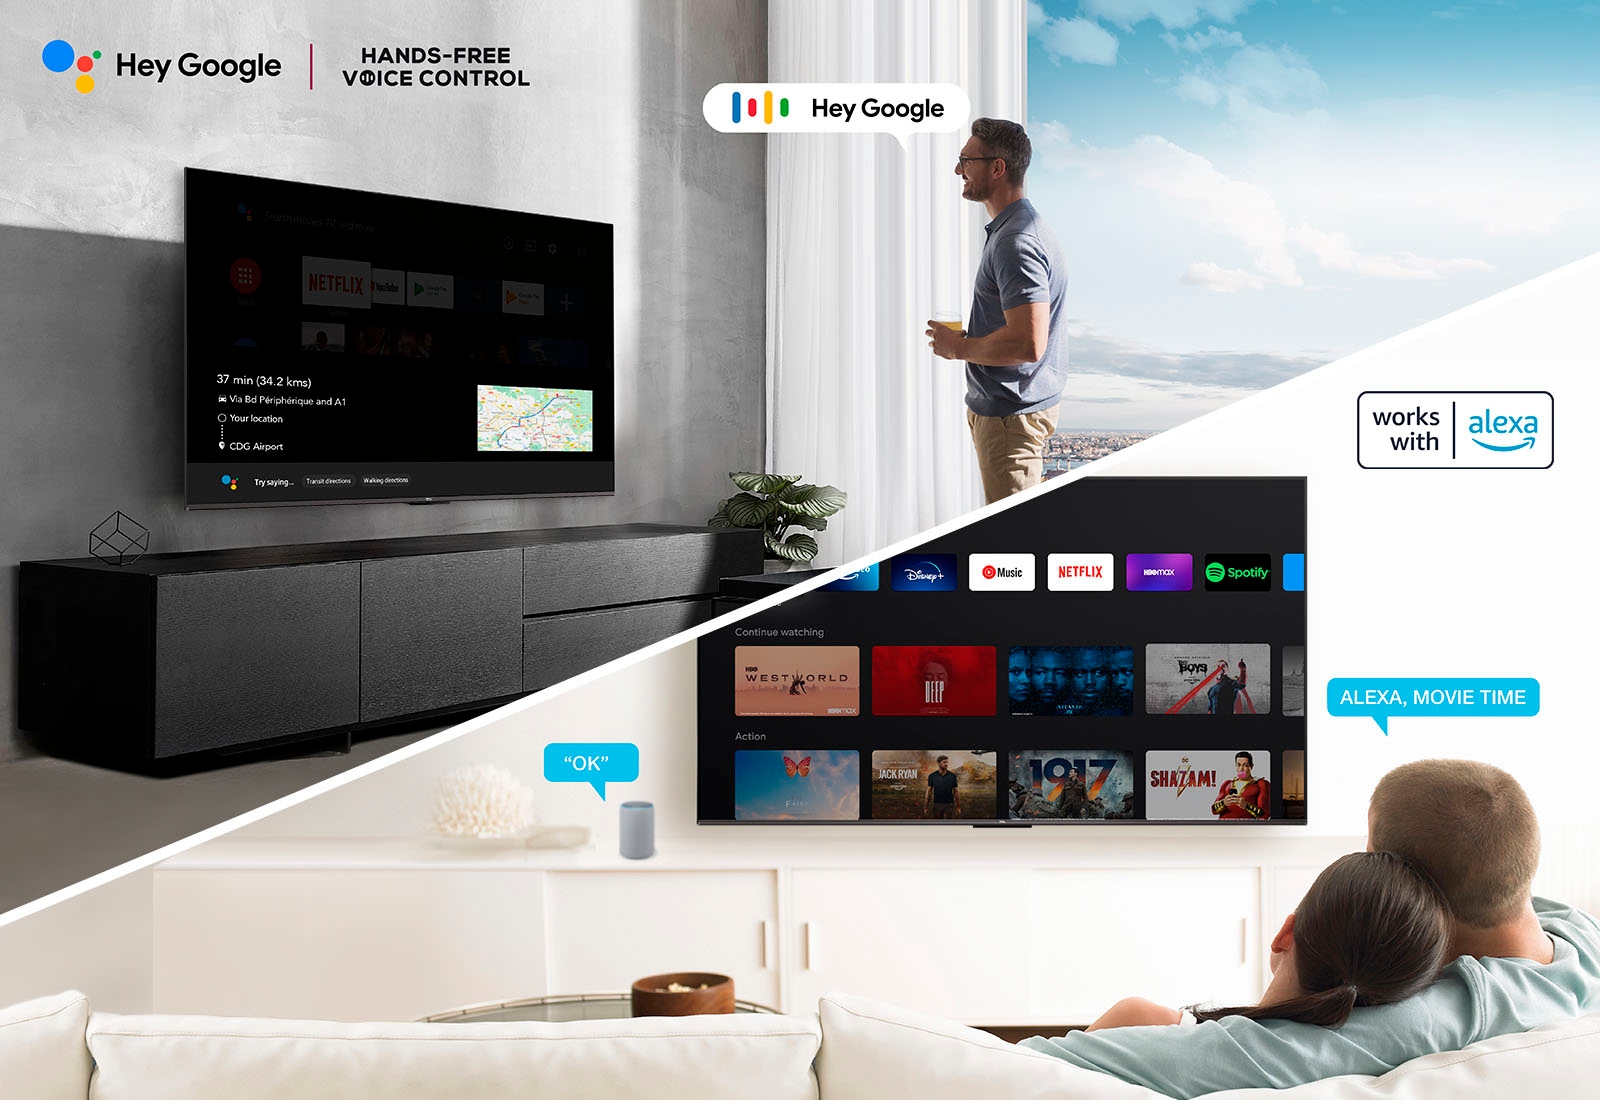 TCL LED-Fernseher »50P731X1«, 126 cm/50 Zoll, 4K Ultra HD, Smart-TV-Google TV, HDR Premium, Dolby Atmos, HDMI 2.1, Metallgehäuse